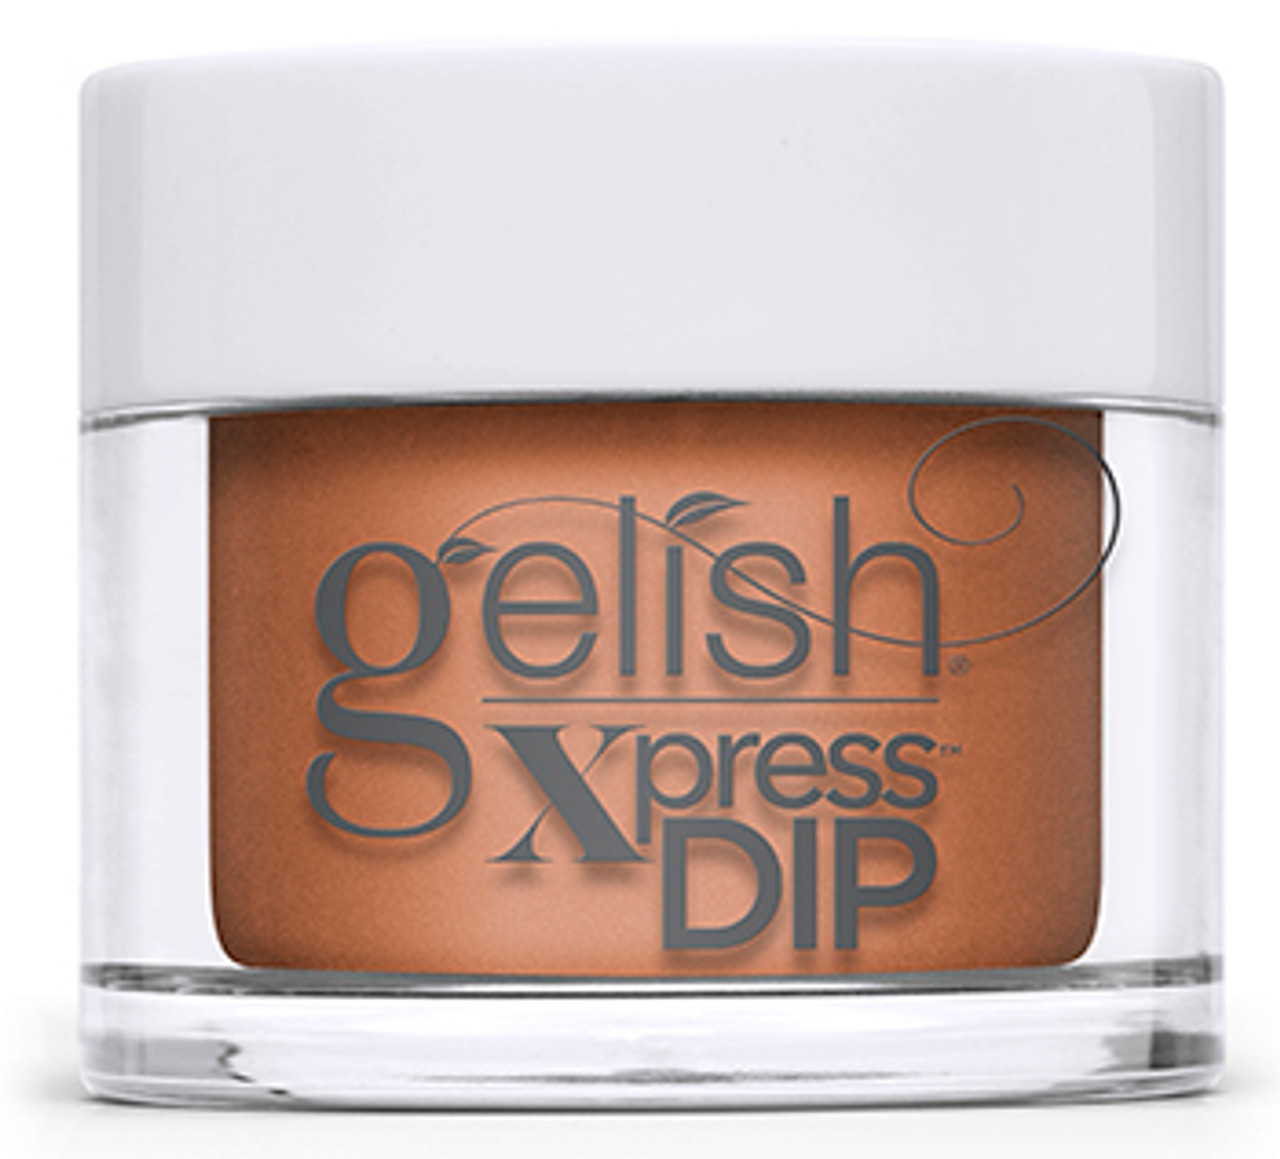 Gelish Xpress Dip Catch Me If You Can - 1.5 oz / 43 g